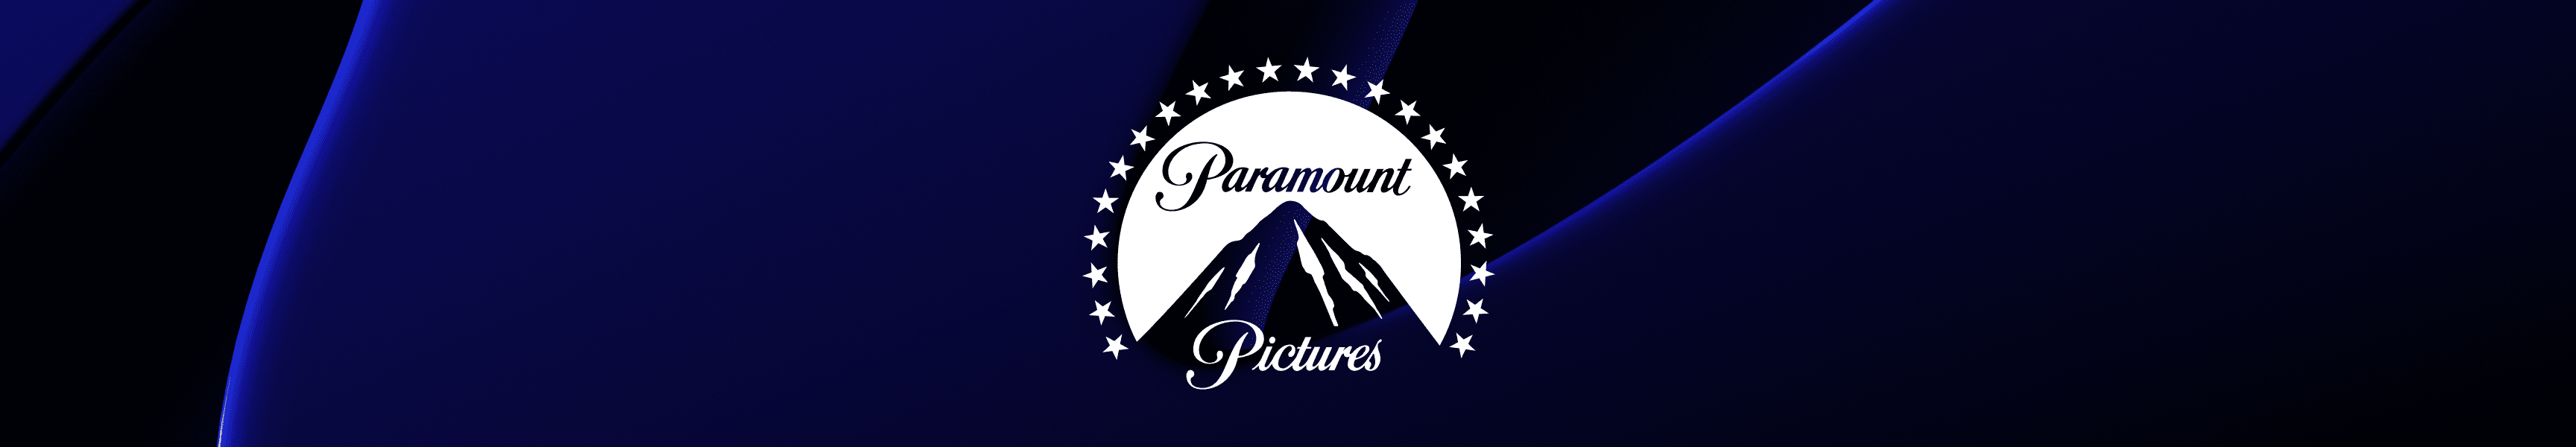 Paramount Pictures Hüte